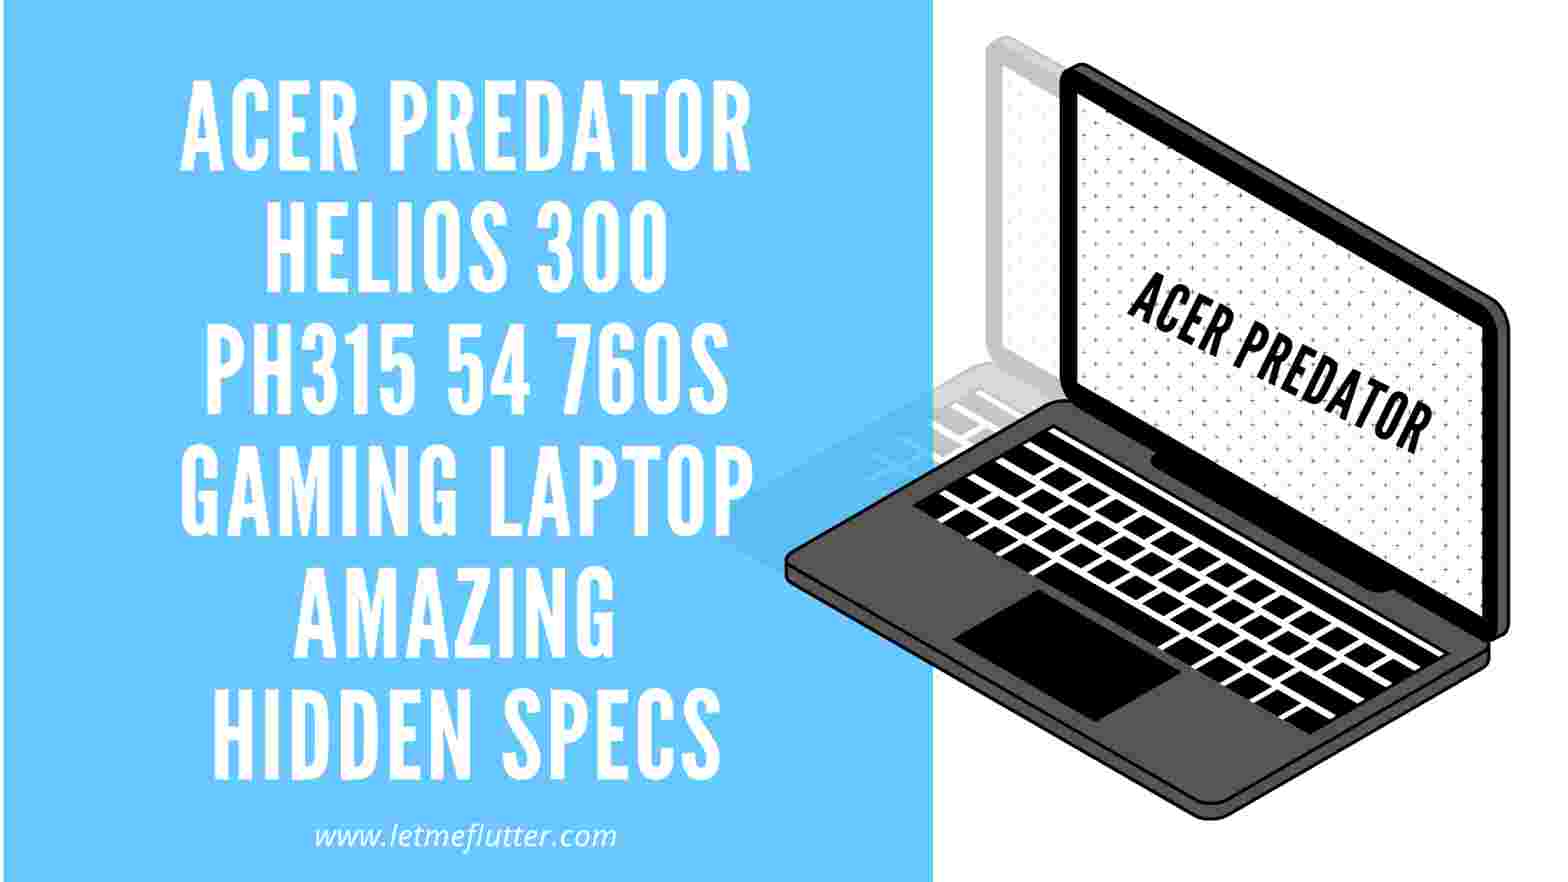 Acer Predator Helios 300 PH315 54 760S